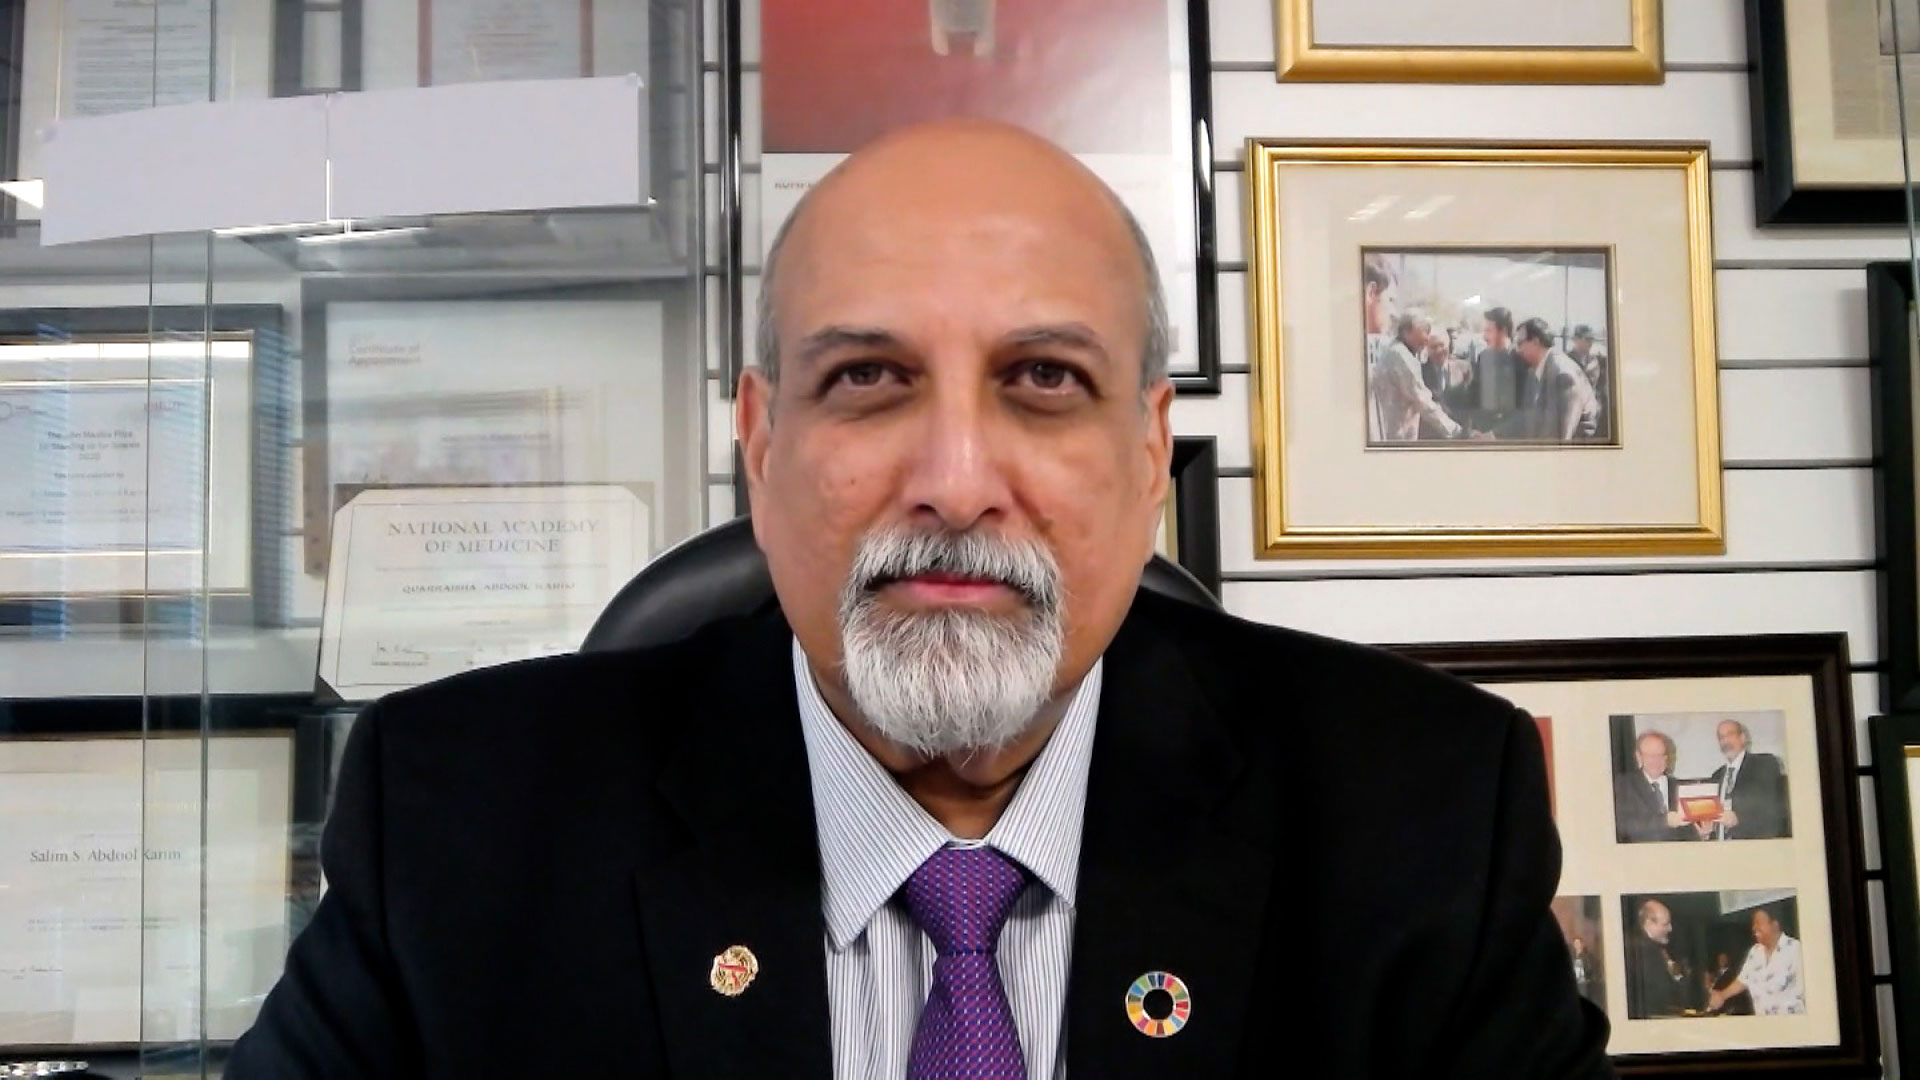 Salim Abdool Karim on November 29.